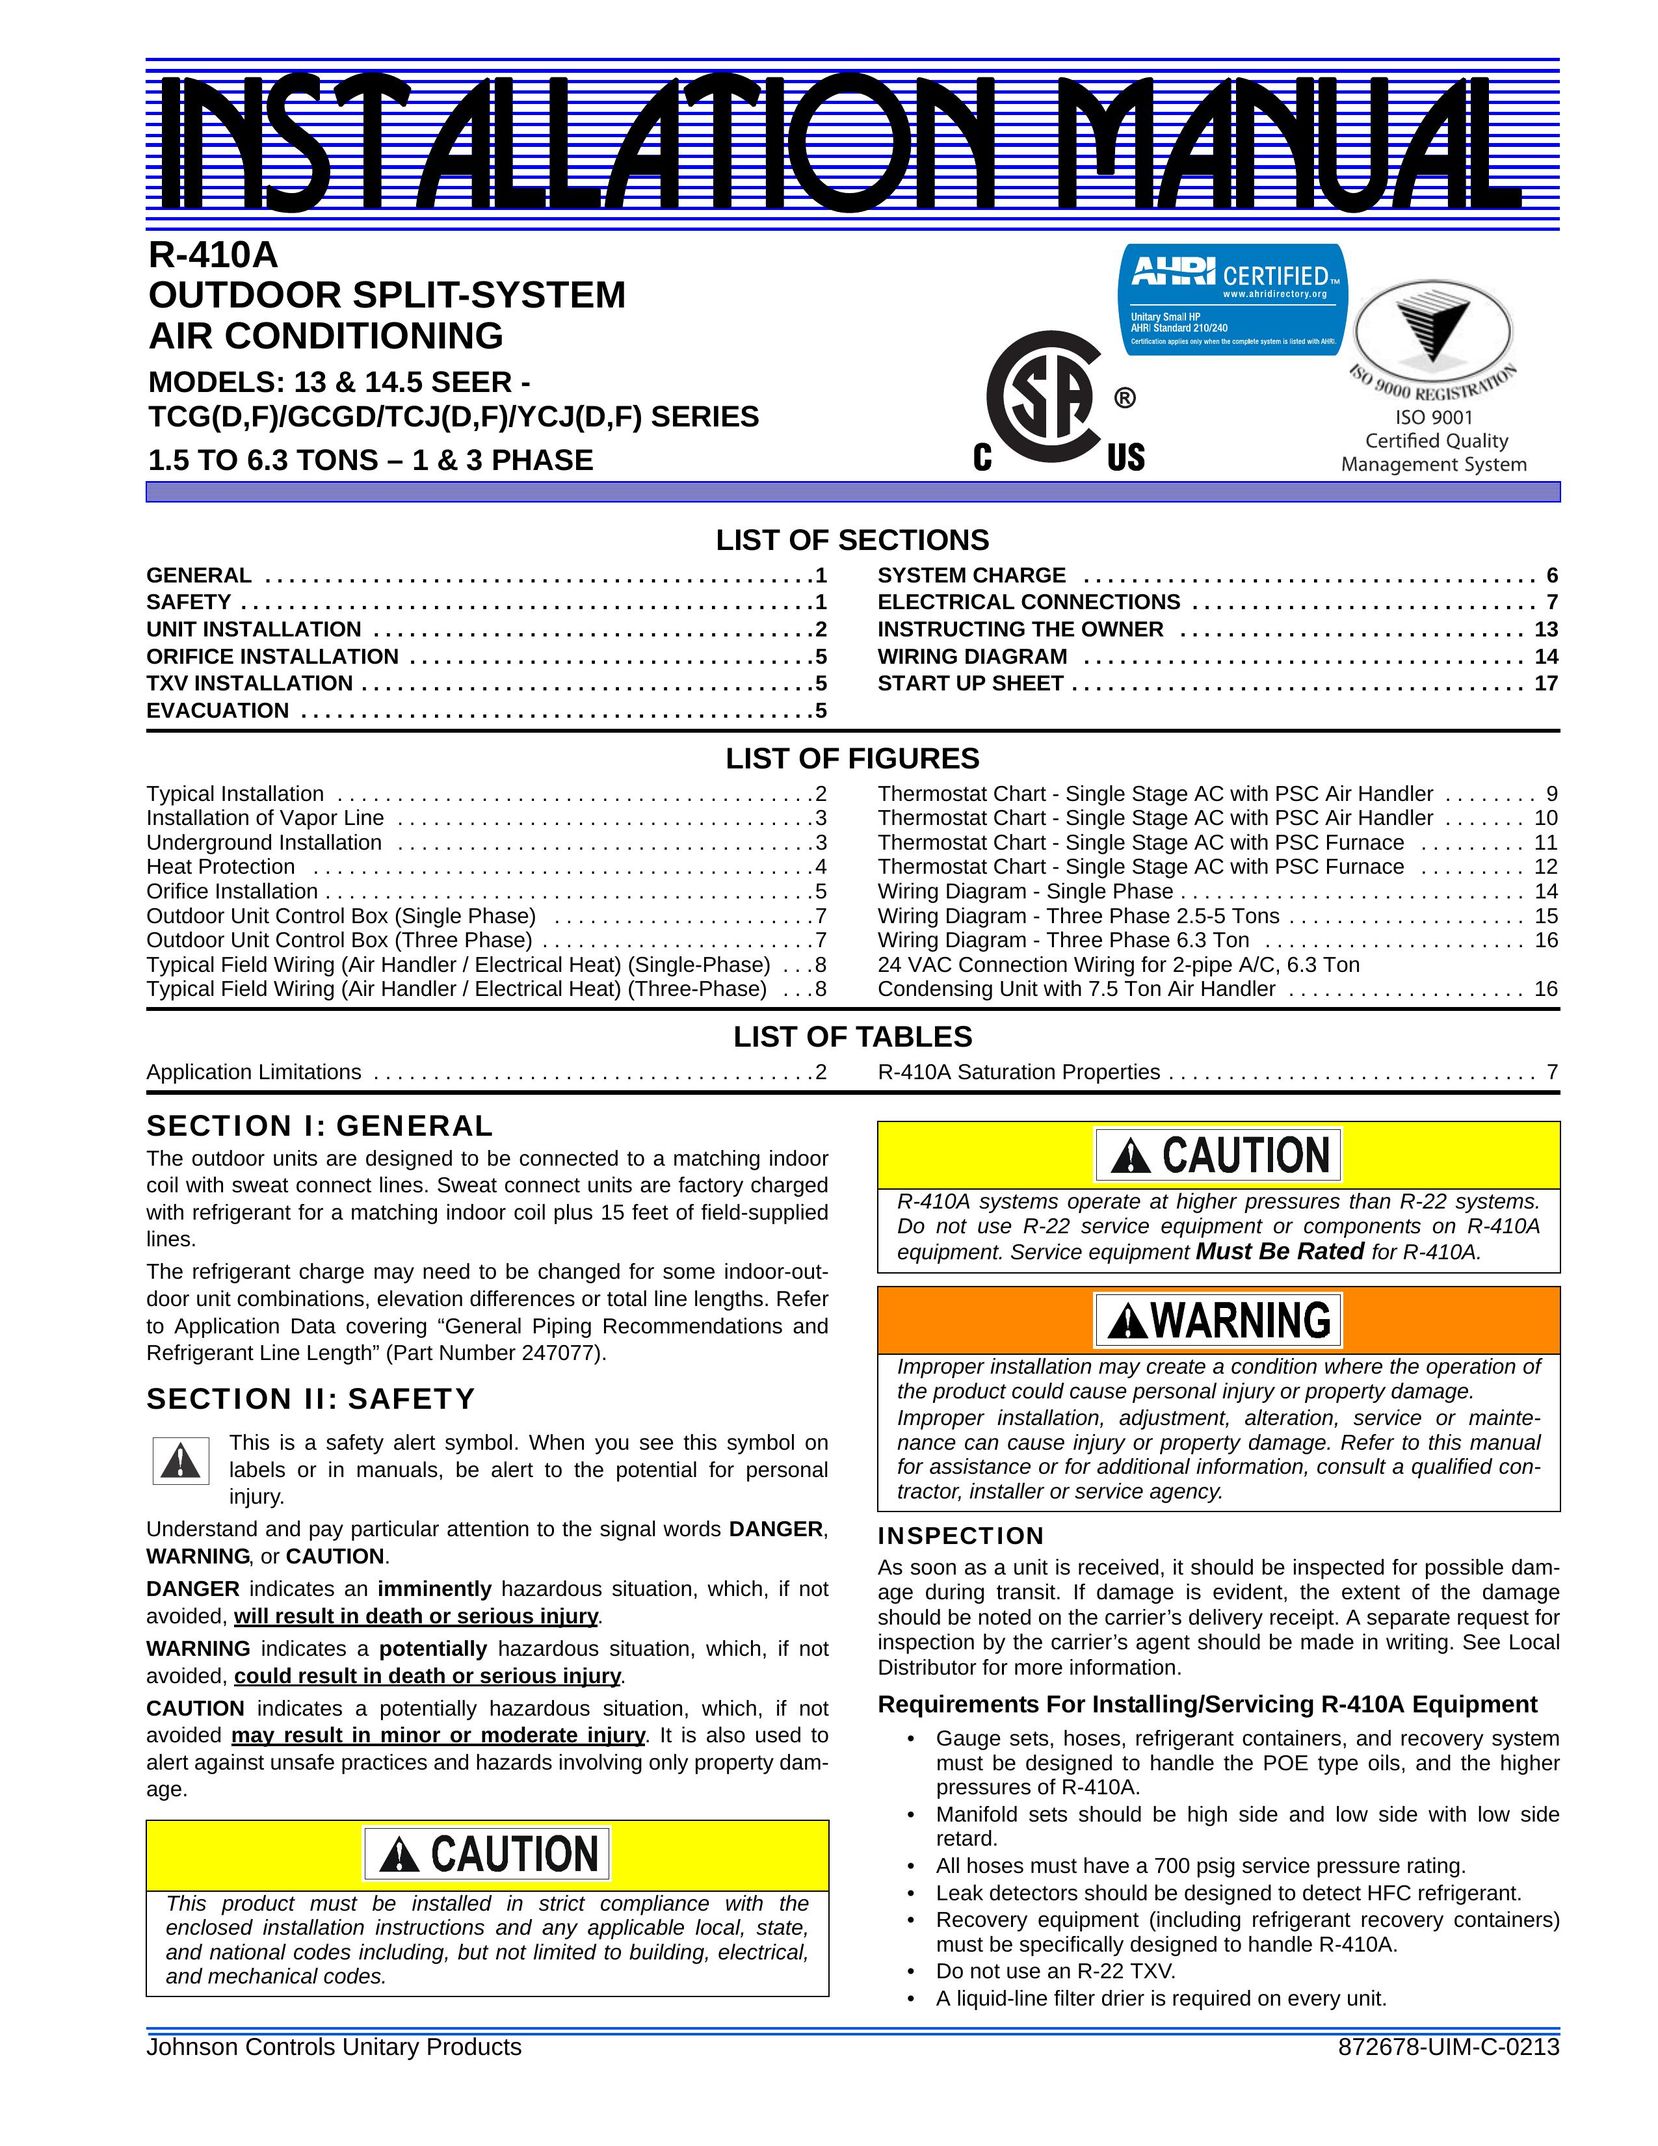 Johnson Controls GCGD Air Conditioner User Manual